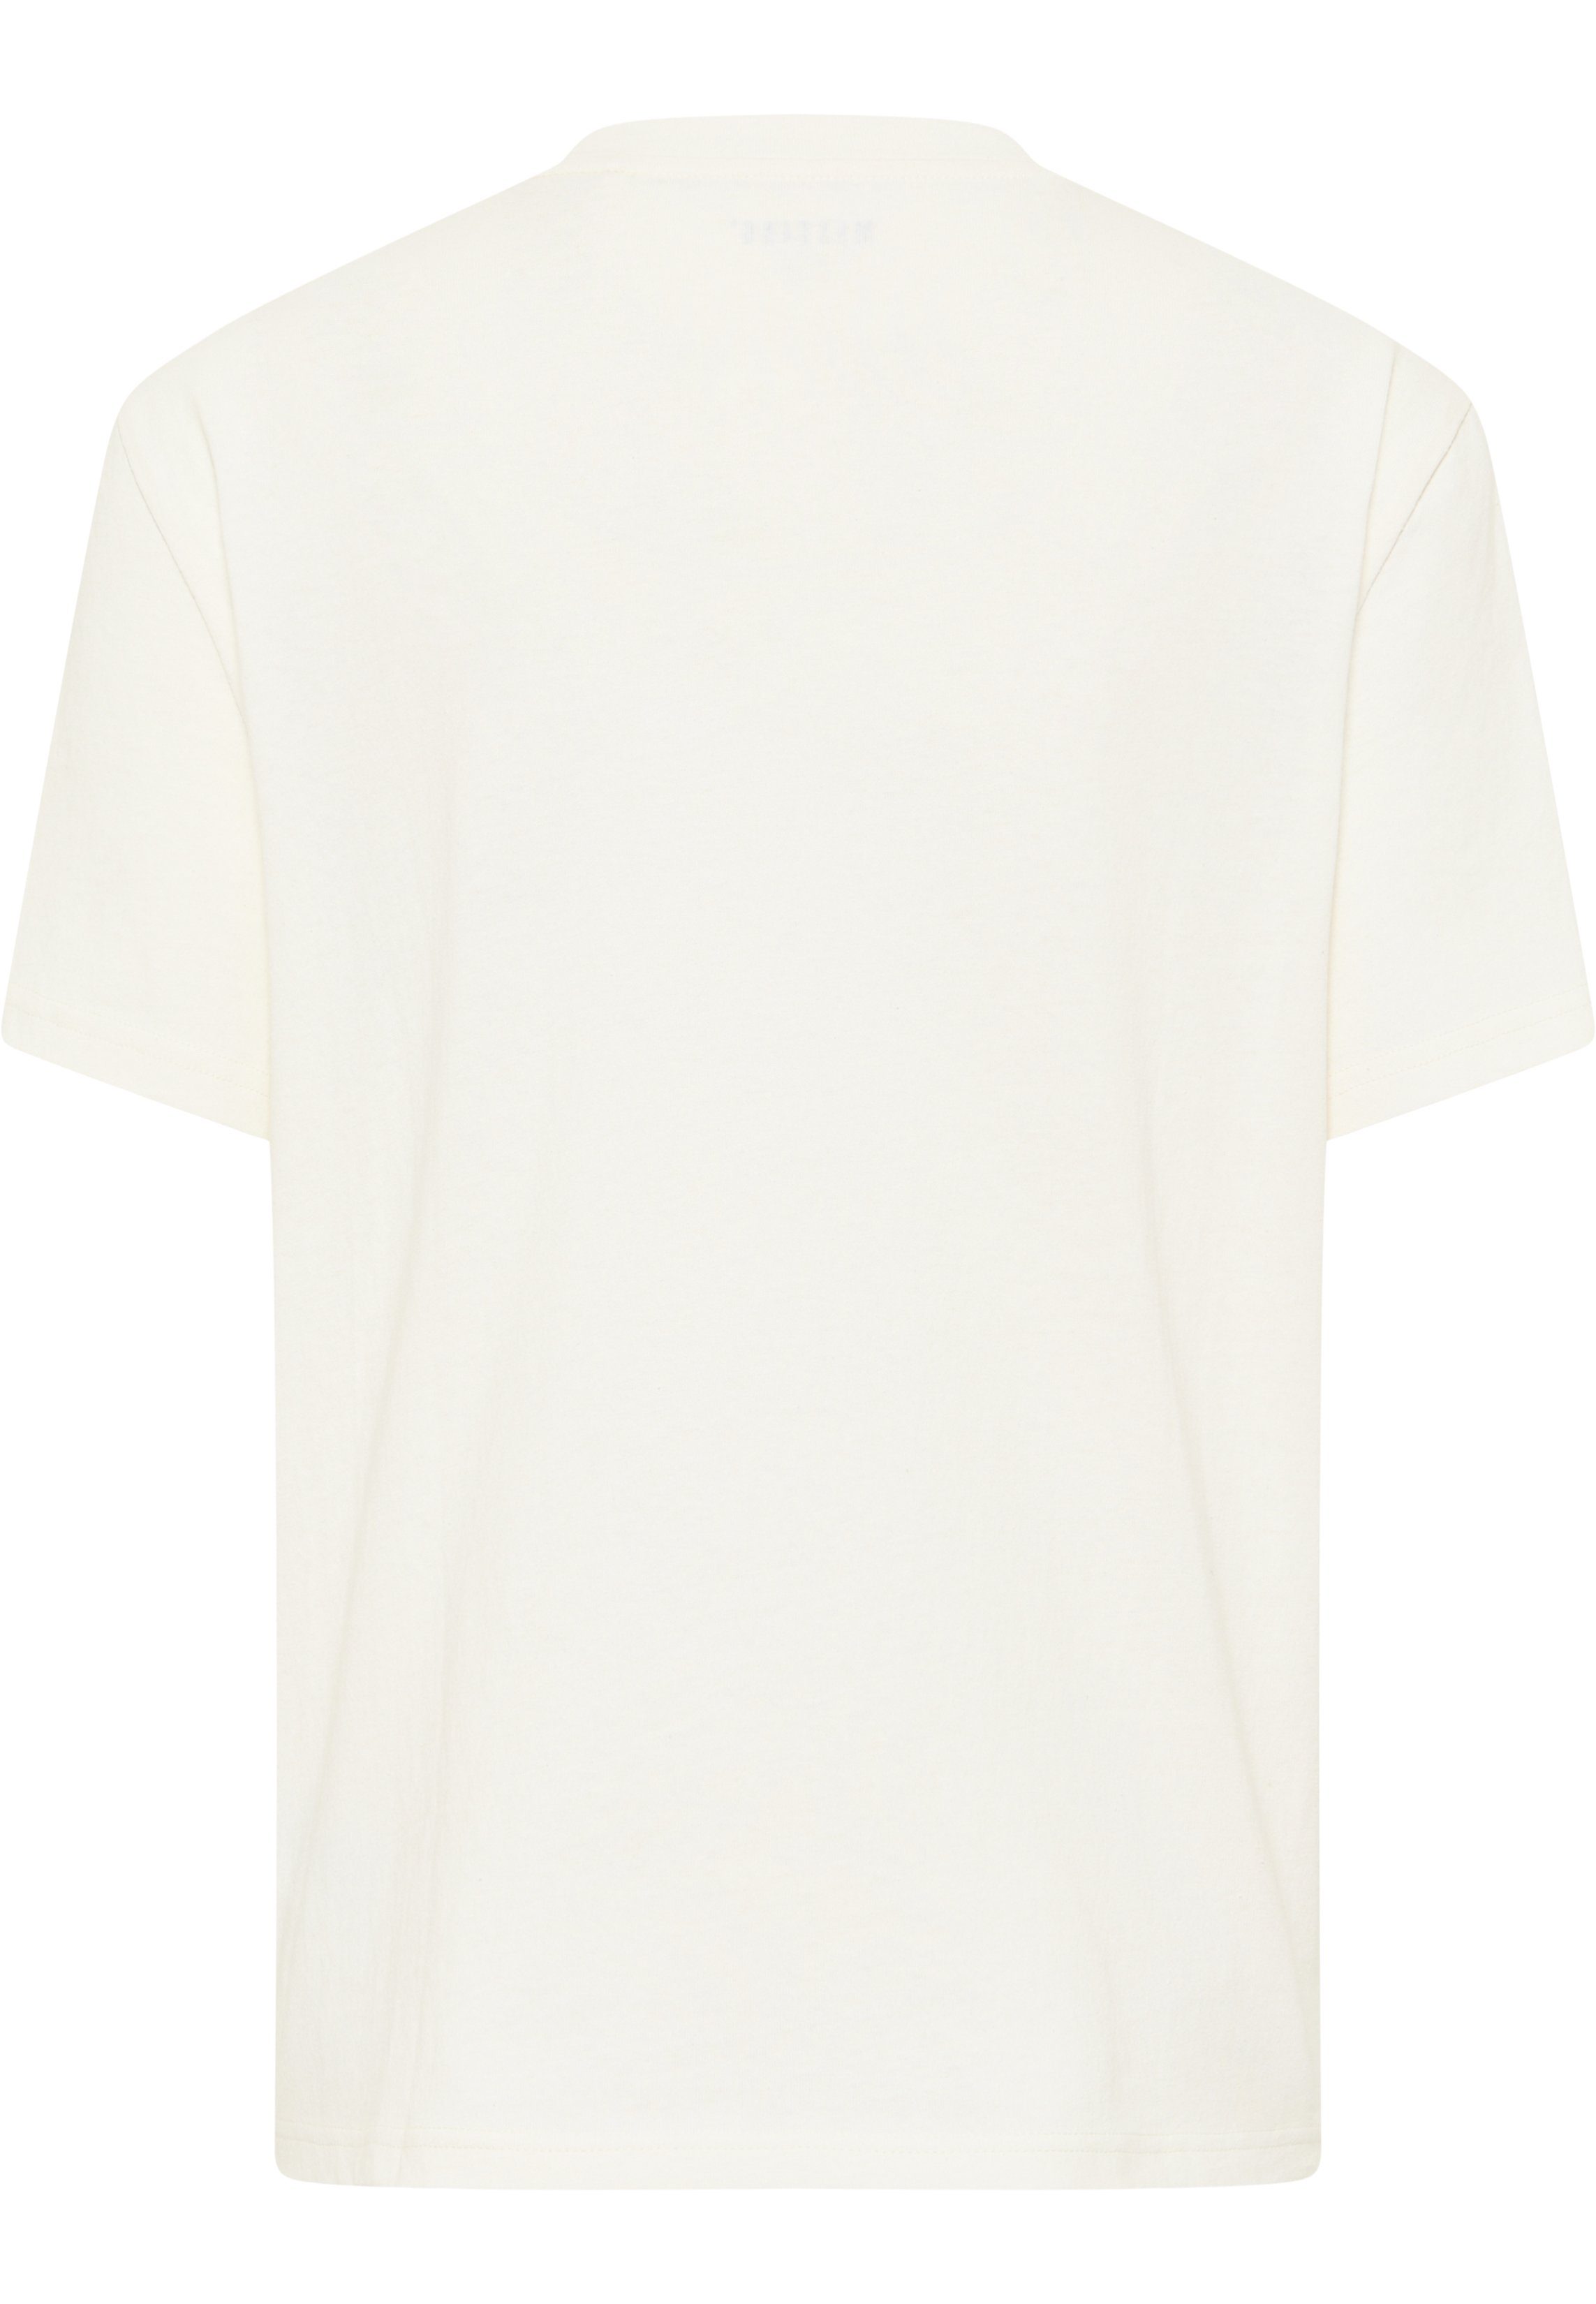 Style Alina Print MUSTANG T-Shirt weiß C